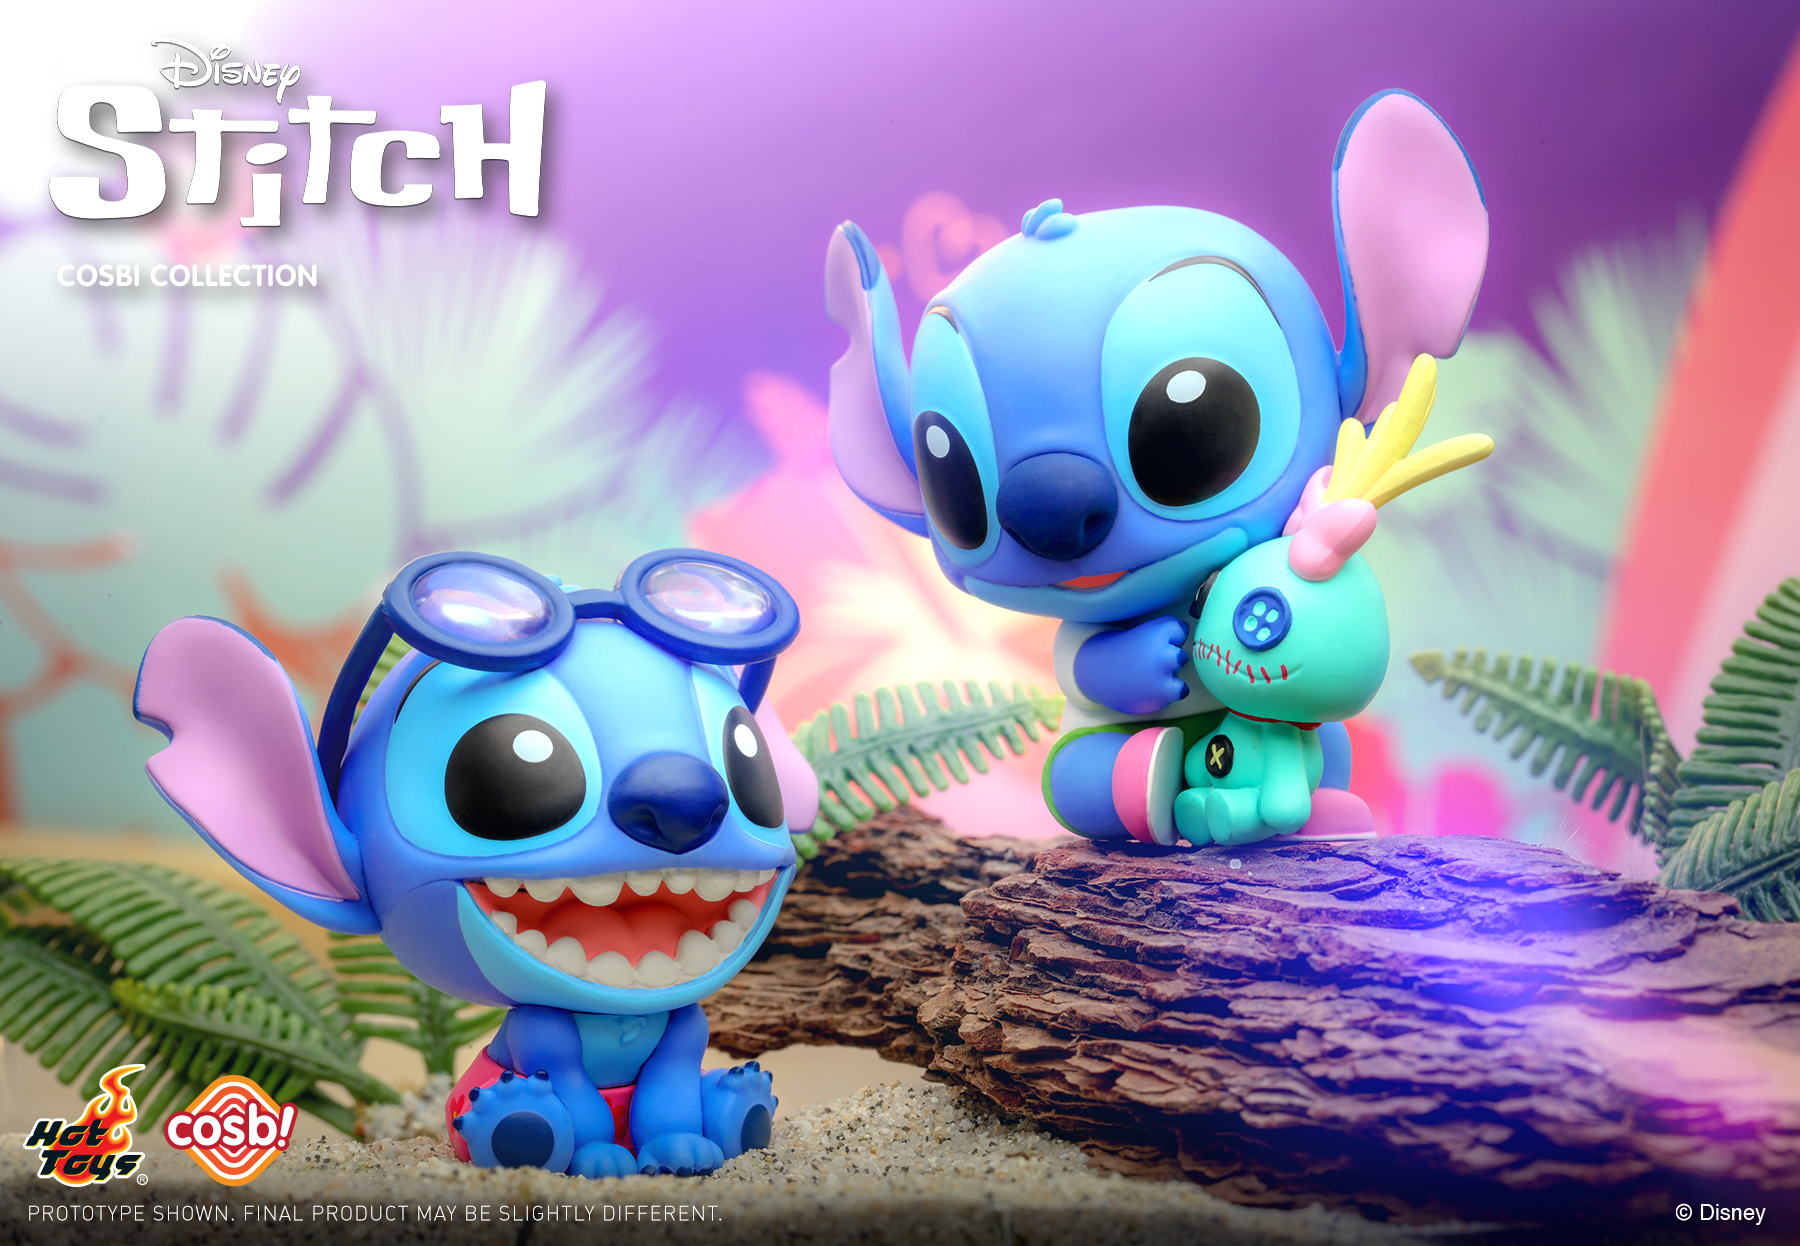 Hot Toys - Stitch Cosbi collection_PR4